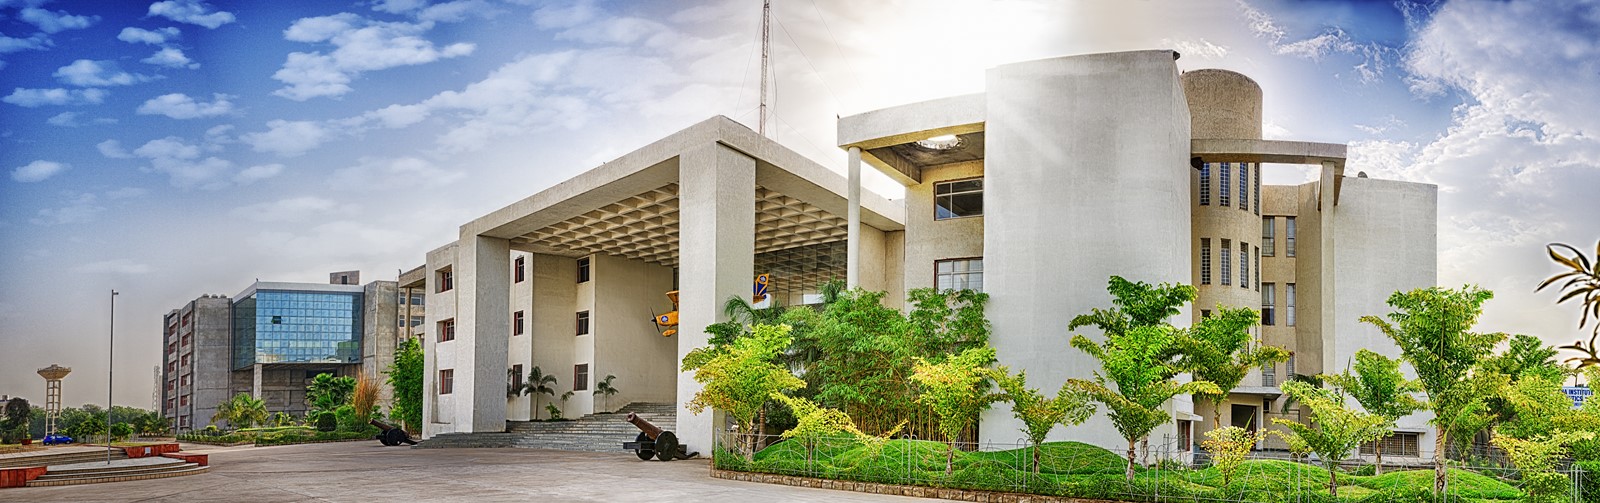 Institute of Sciences Humanities and Liberal Studies, Ahmedabad